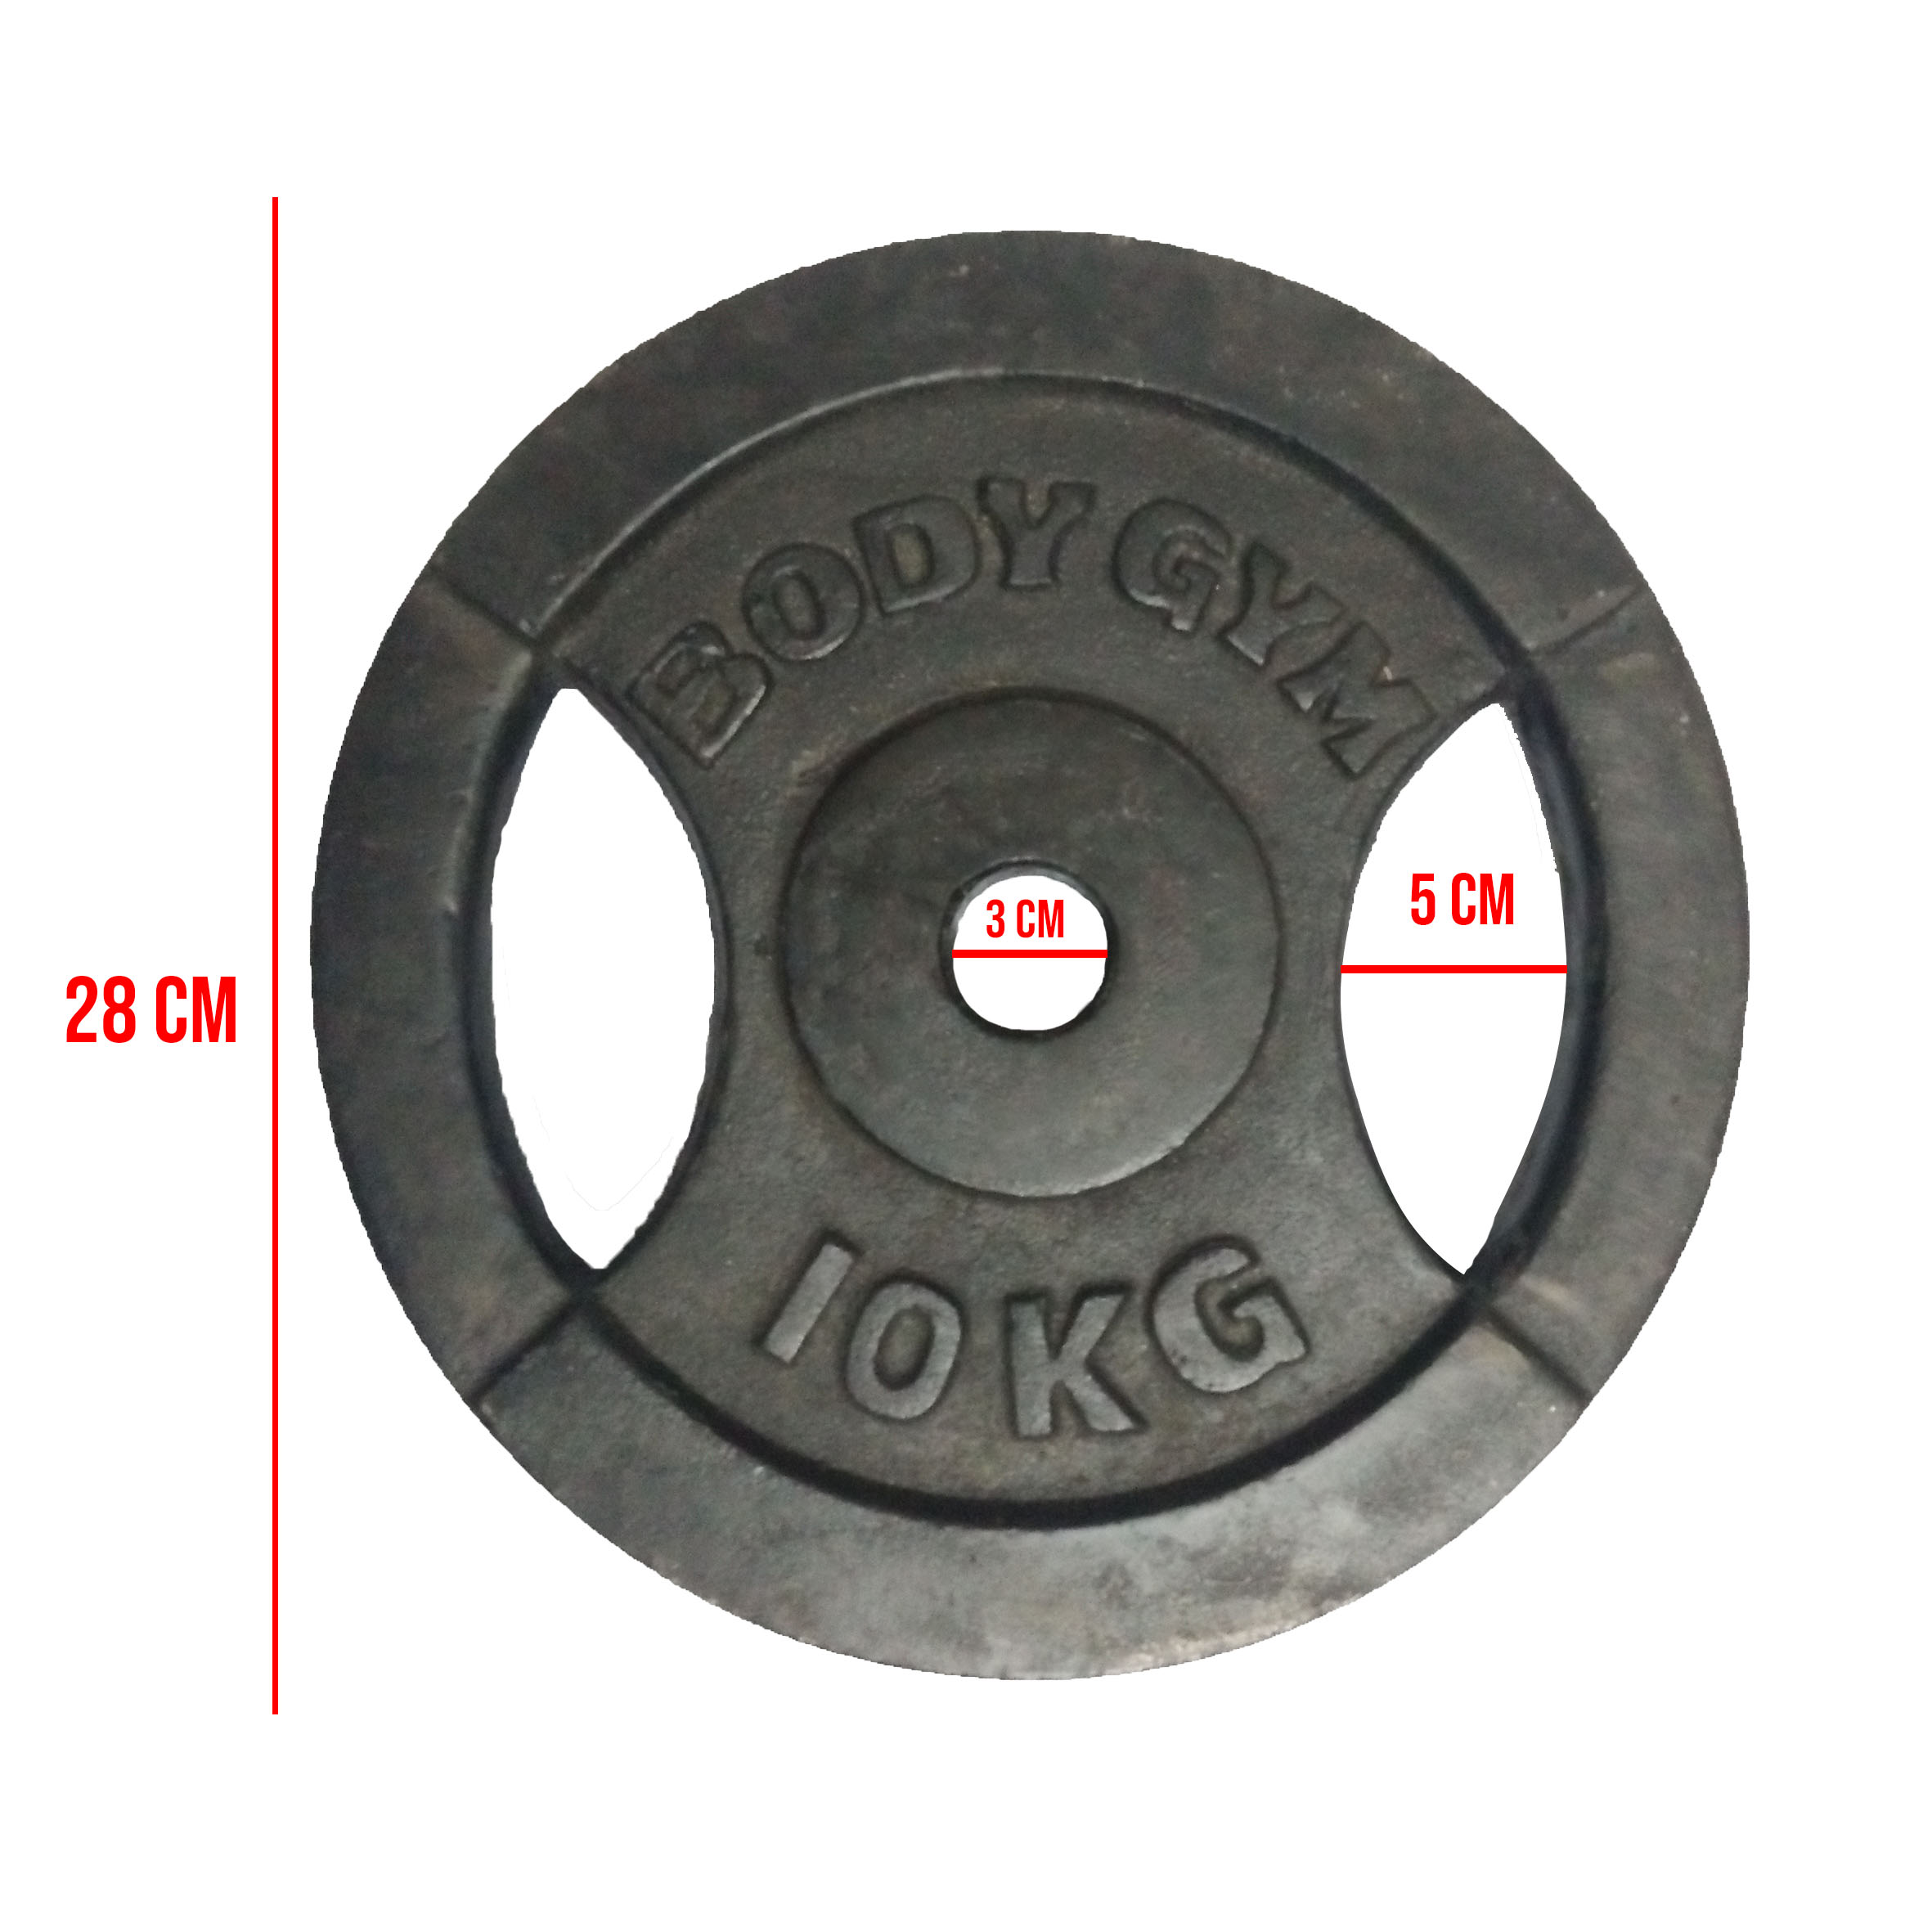 SPESIFIKASI IRON PLATE 20 KG 3 CM - Body Gym Iron Plate Grip 3 cm 10 kg